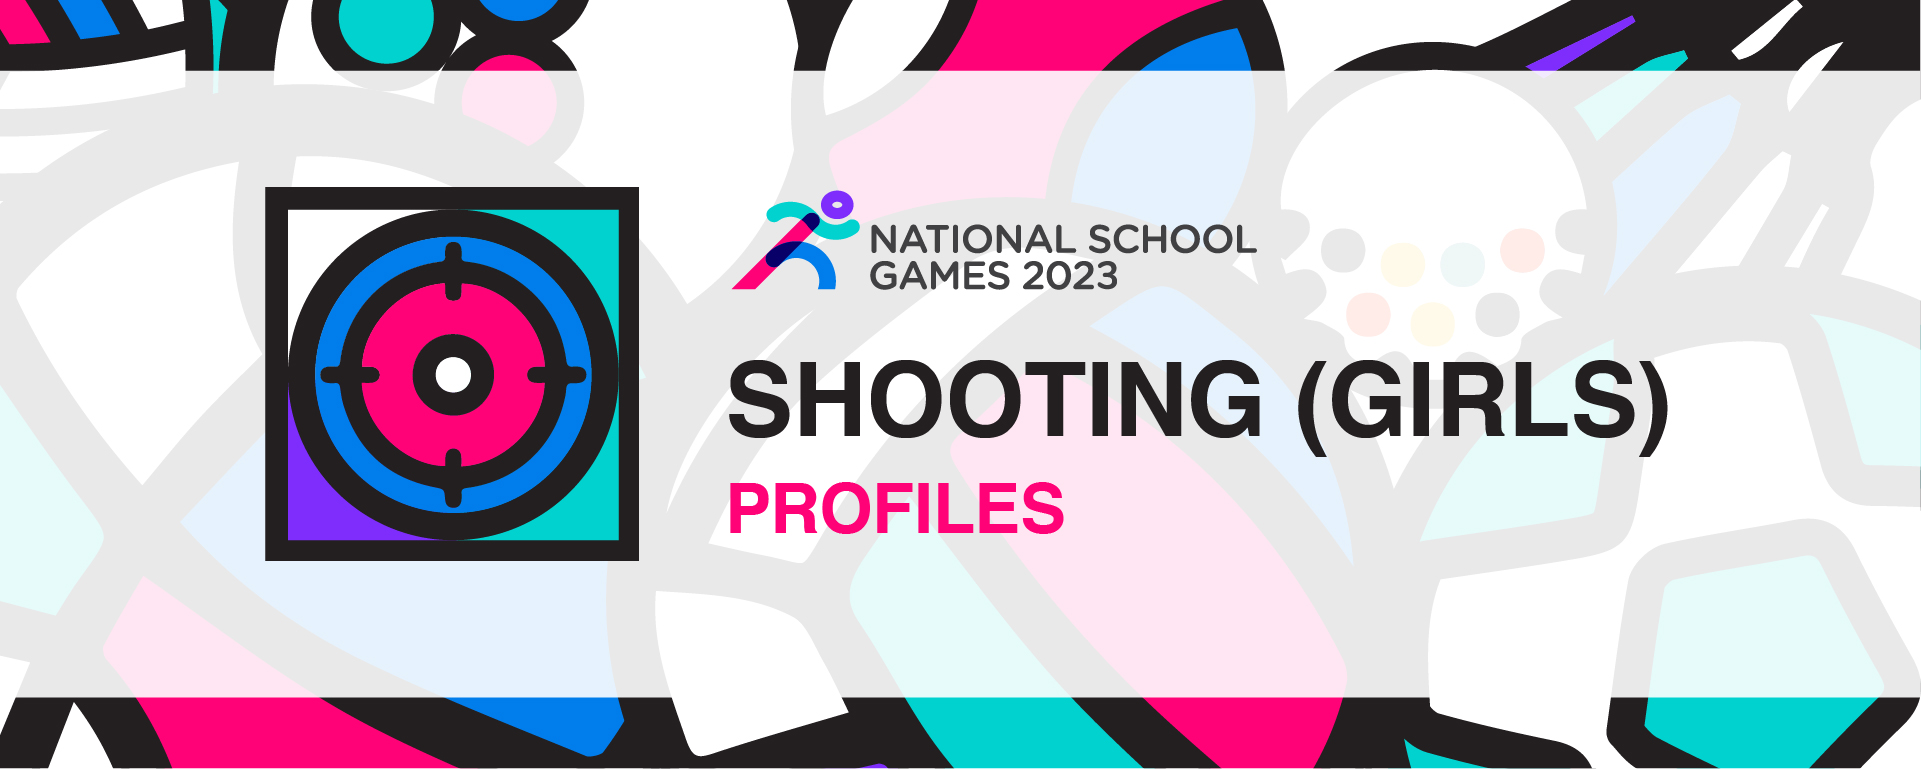 National School Games 2023 | Shooting | Profiles